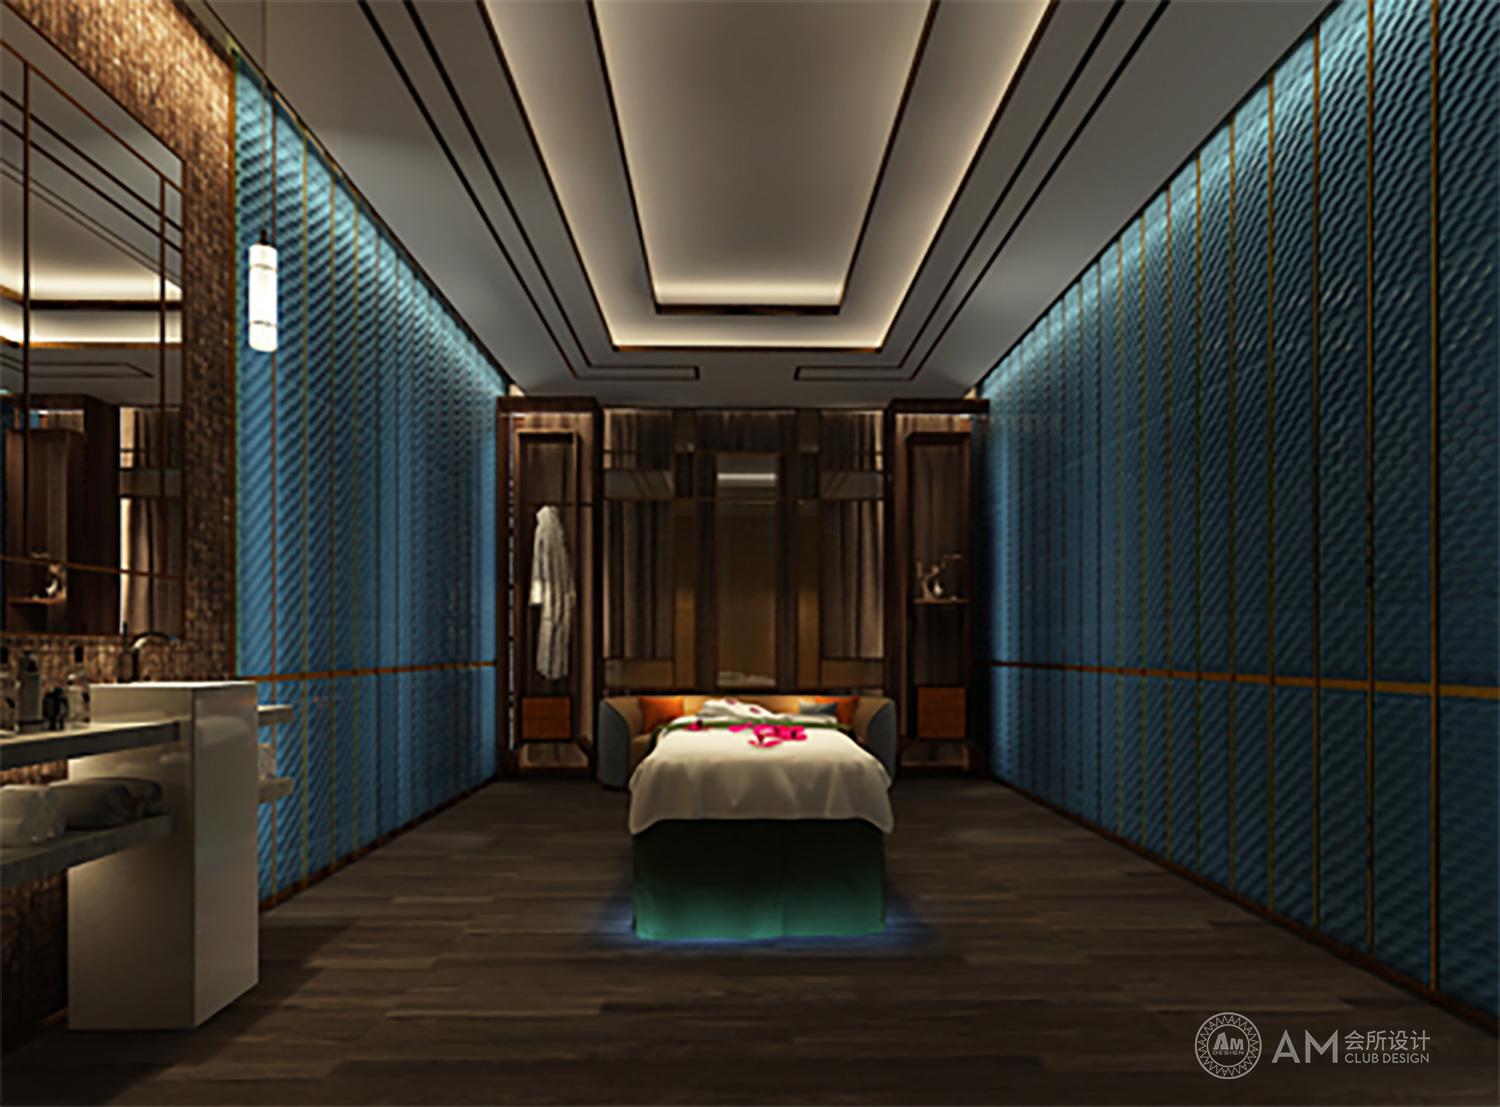 AM DESIGN | Spa room design of Jiugongge Spa Club